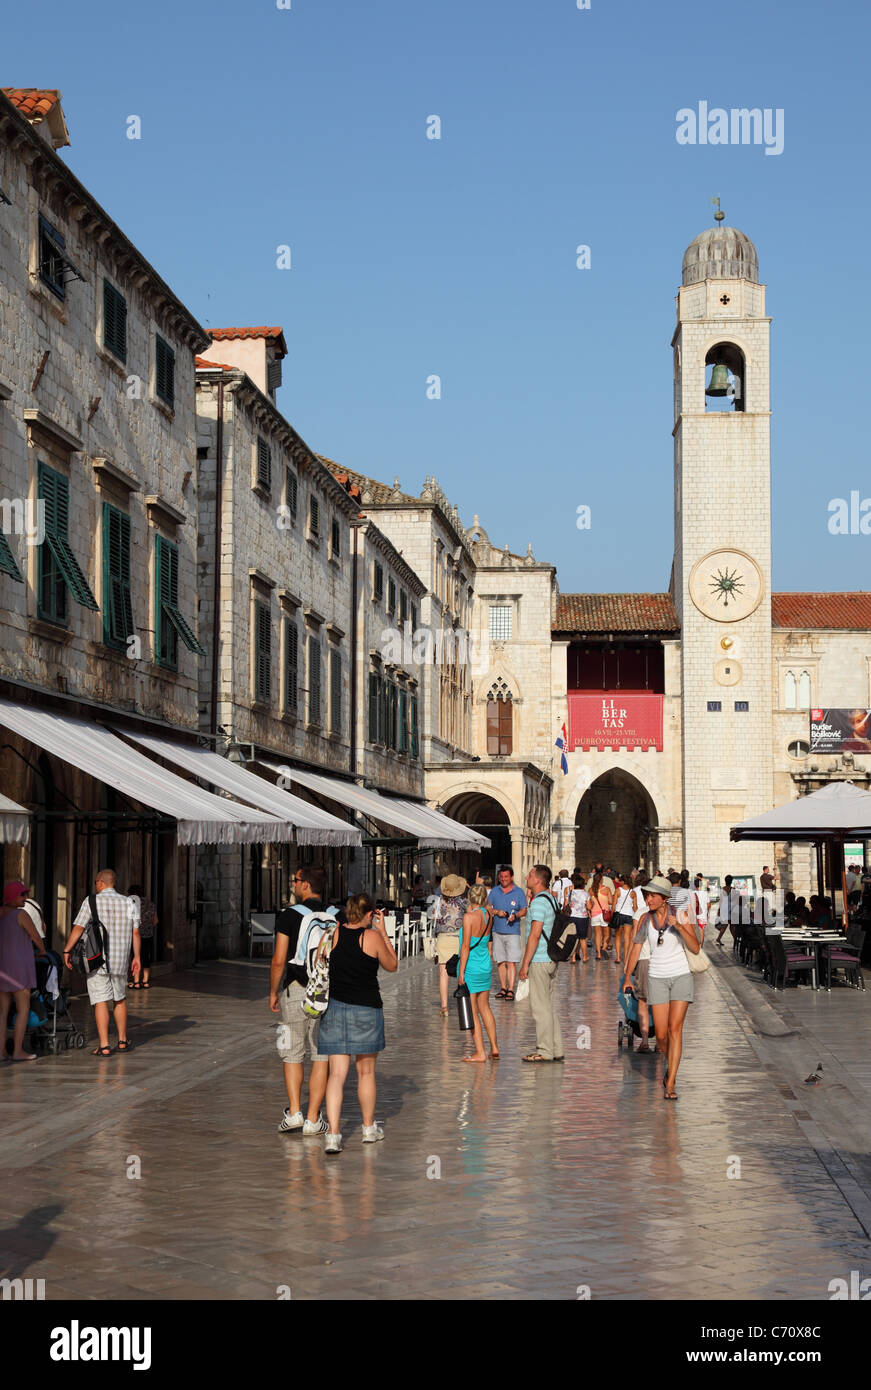 The main street in Dubrovnik old town - Stradun Stock Photo